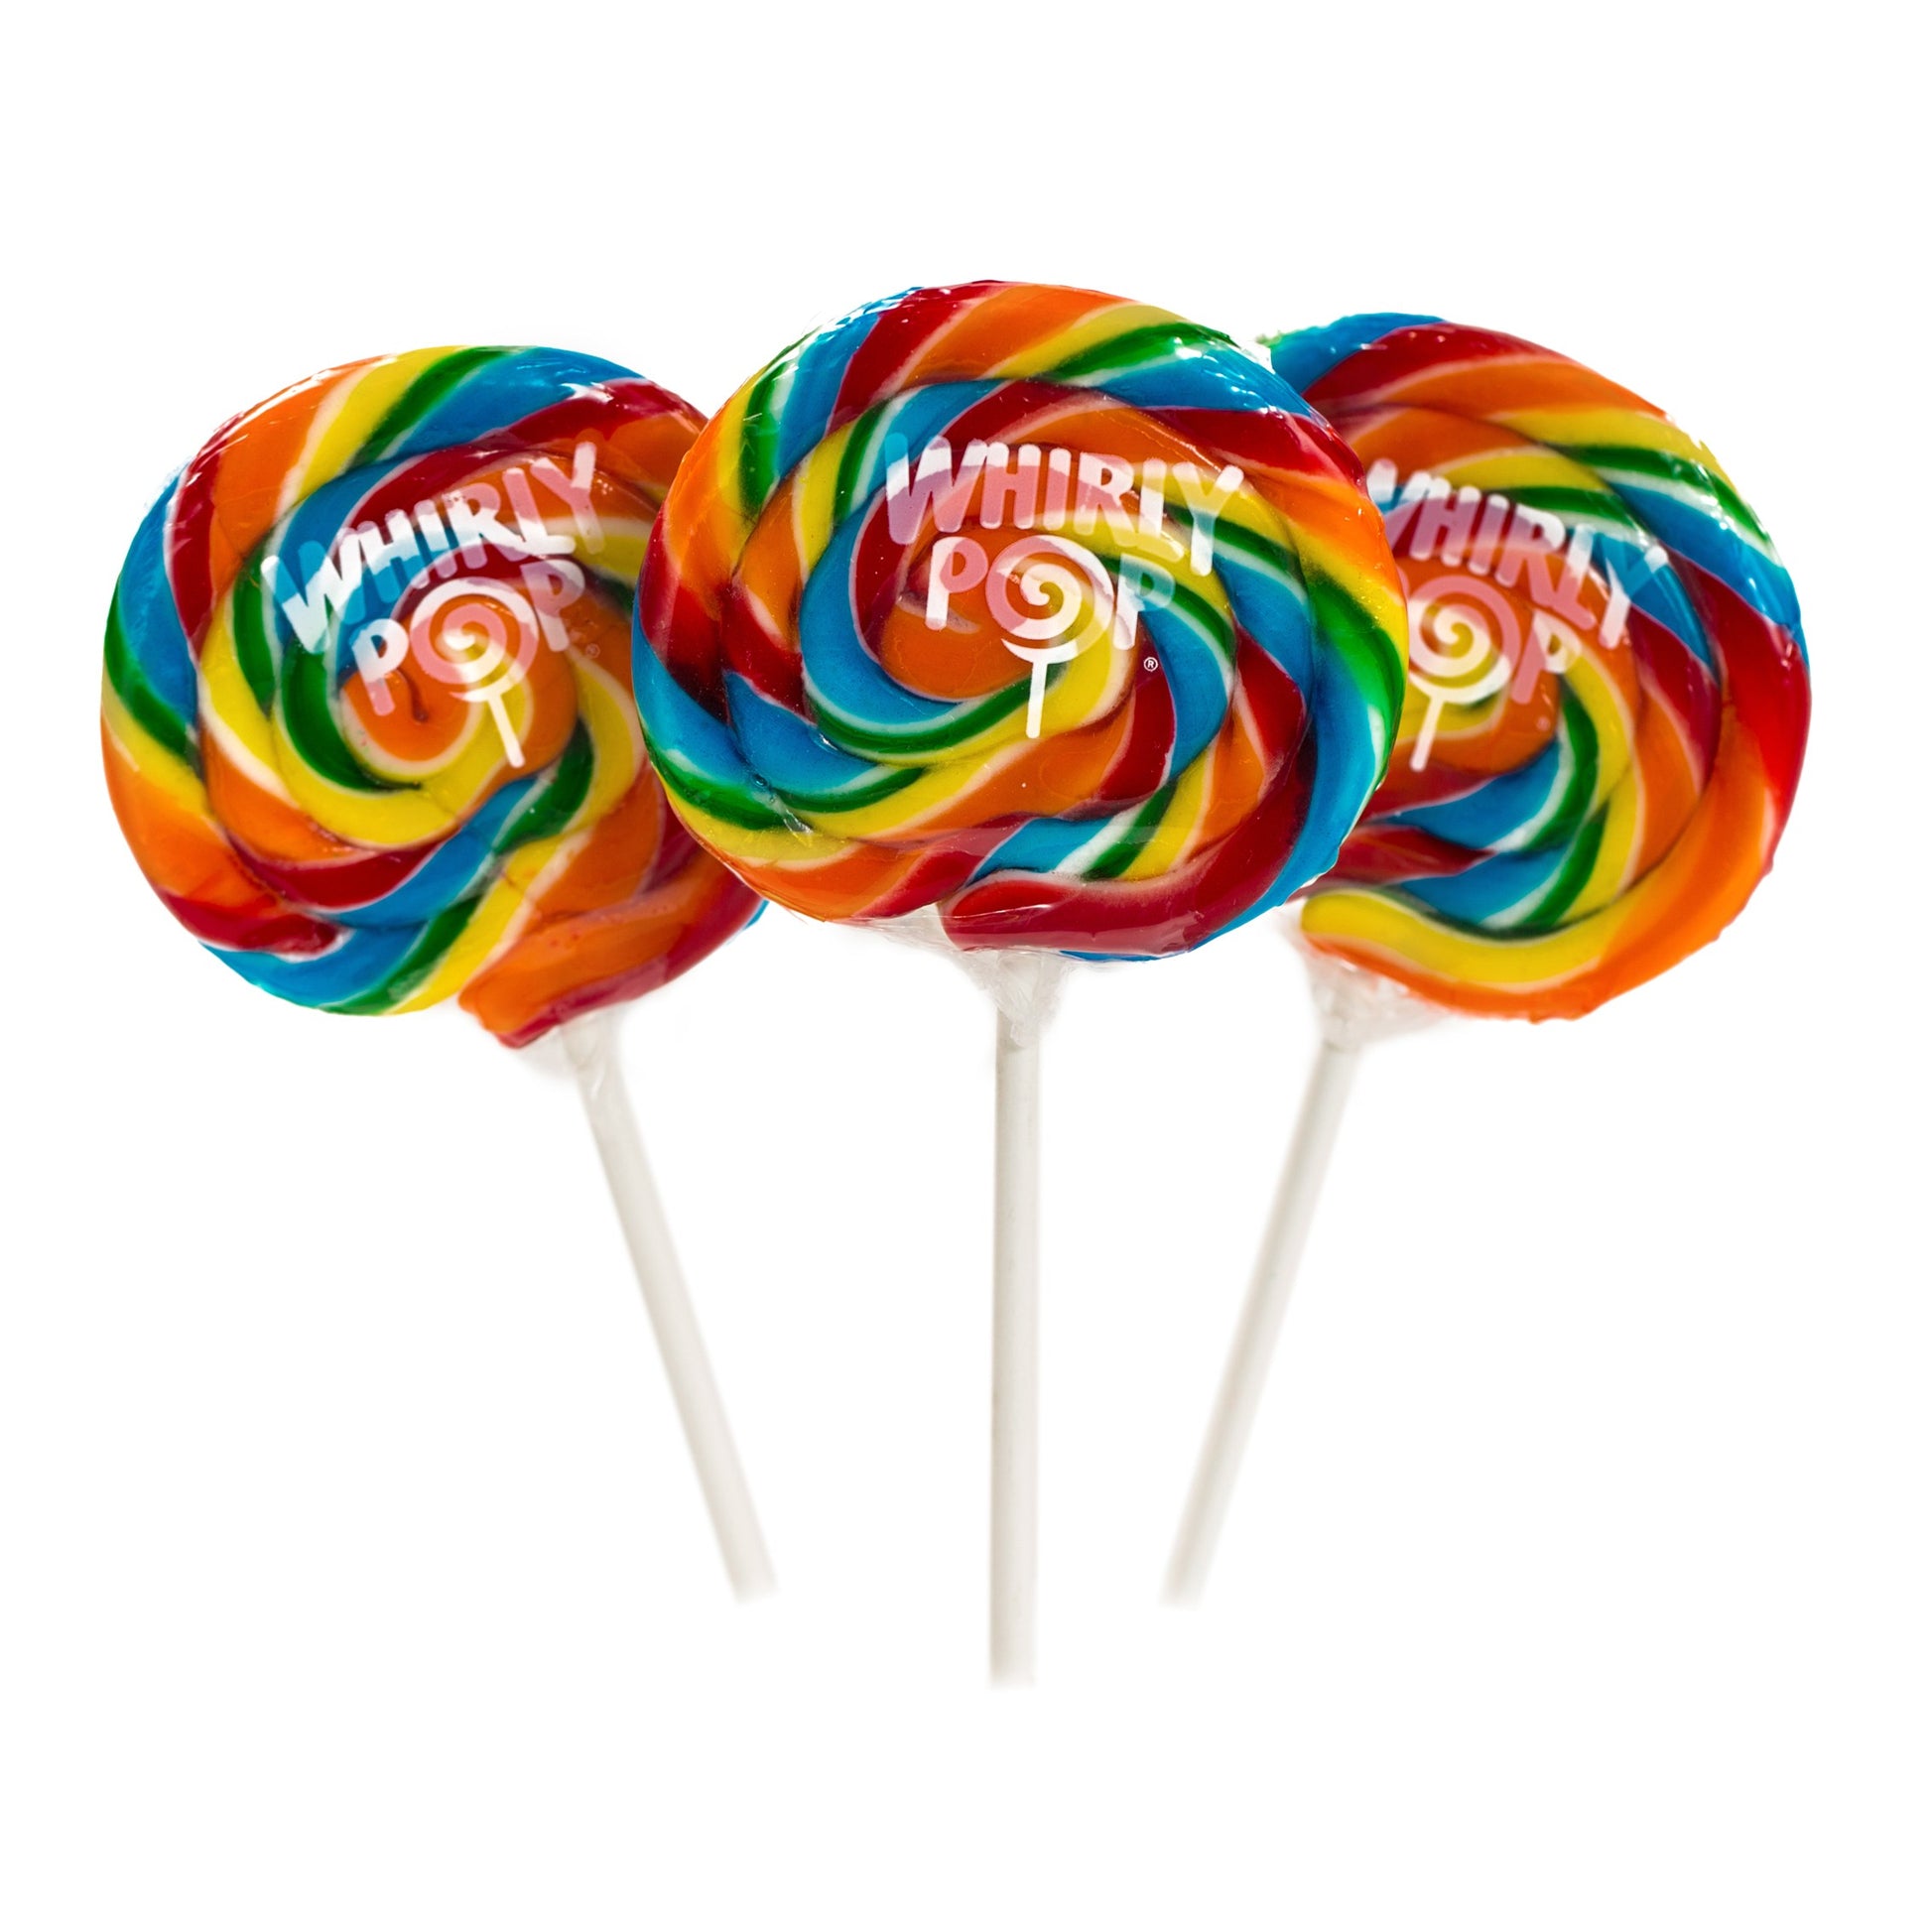 Whirly Pop Lollipop / 10 Oz / 6 Inch Lollipop Red -  Sweden